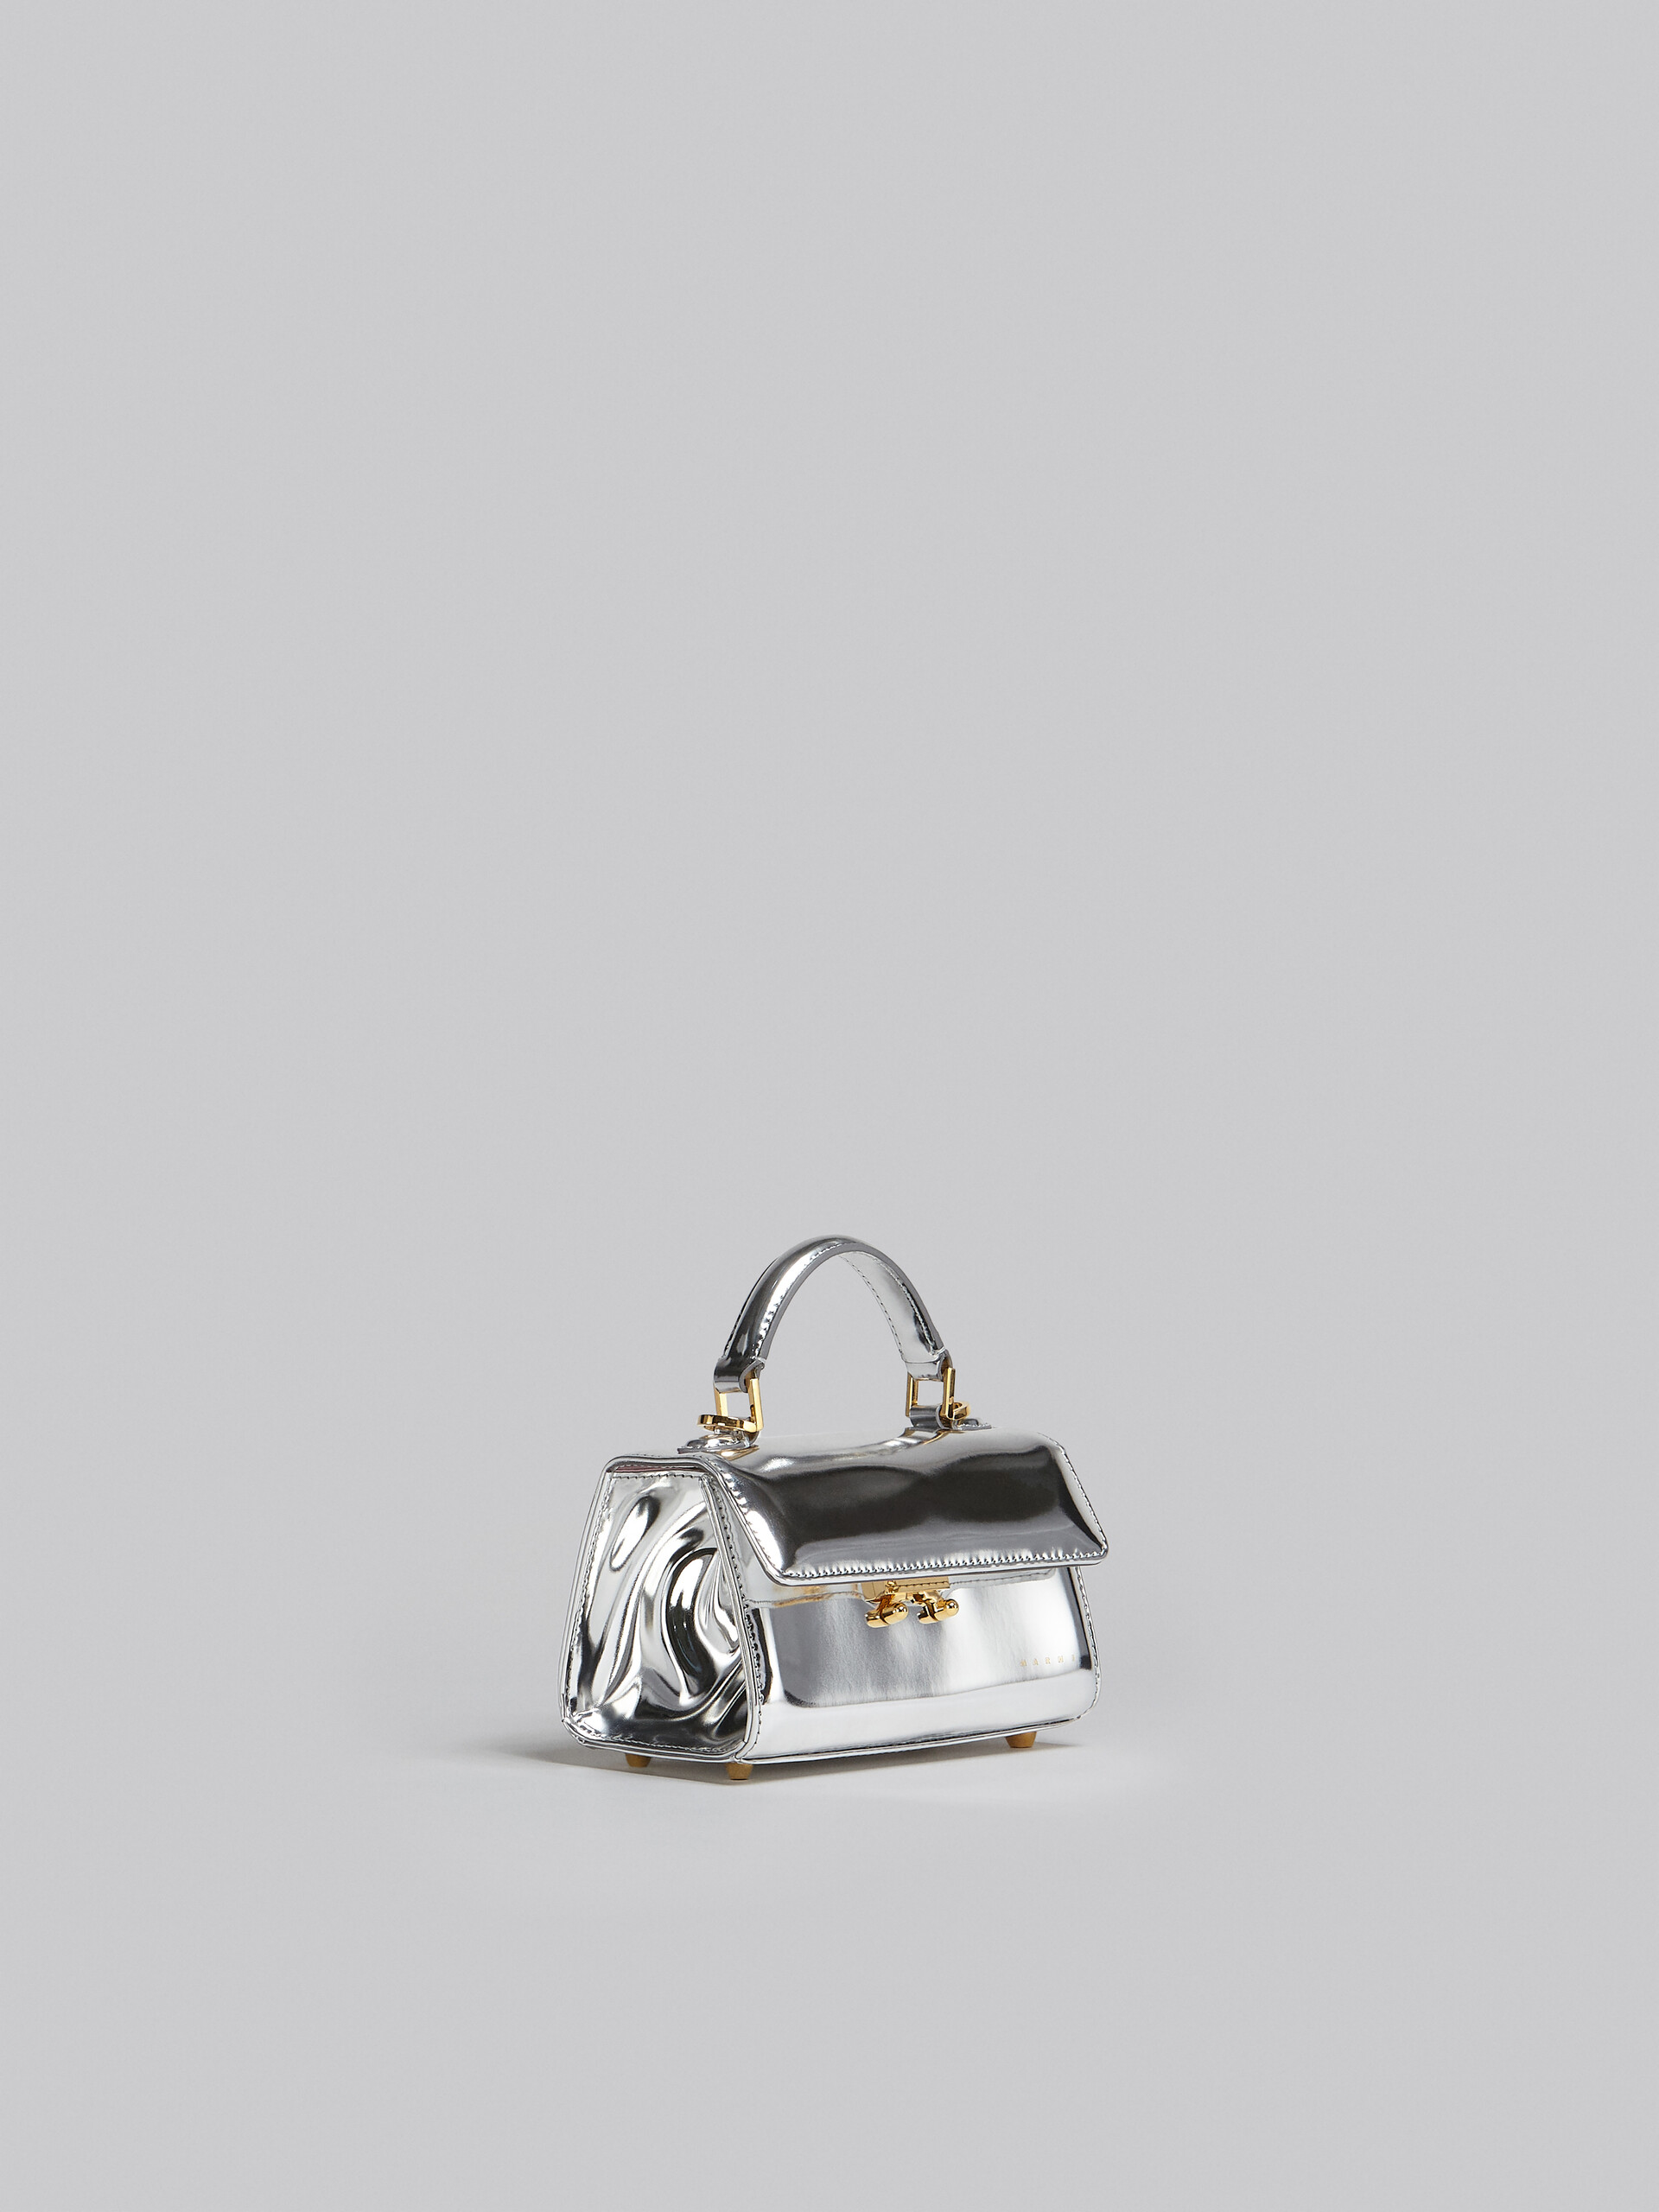 Relativity Mini Bag in silver mirrored leather - Handbags - Image 6